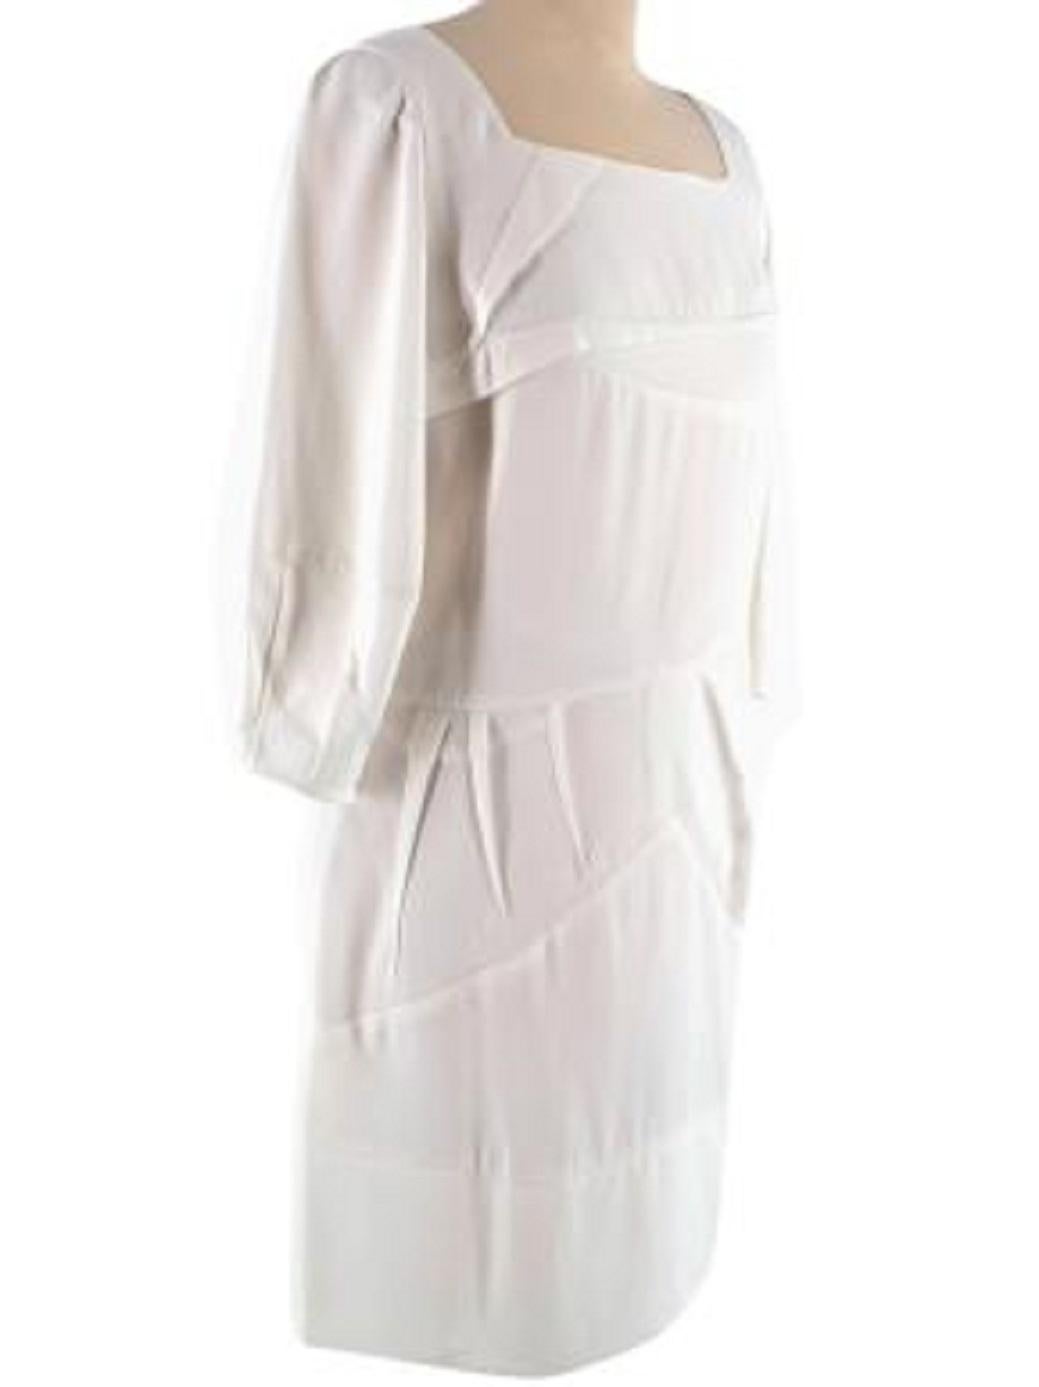 Chloe White Square Neck Silk Mini Dress In Excellent Condition For Sale In London, GB